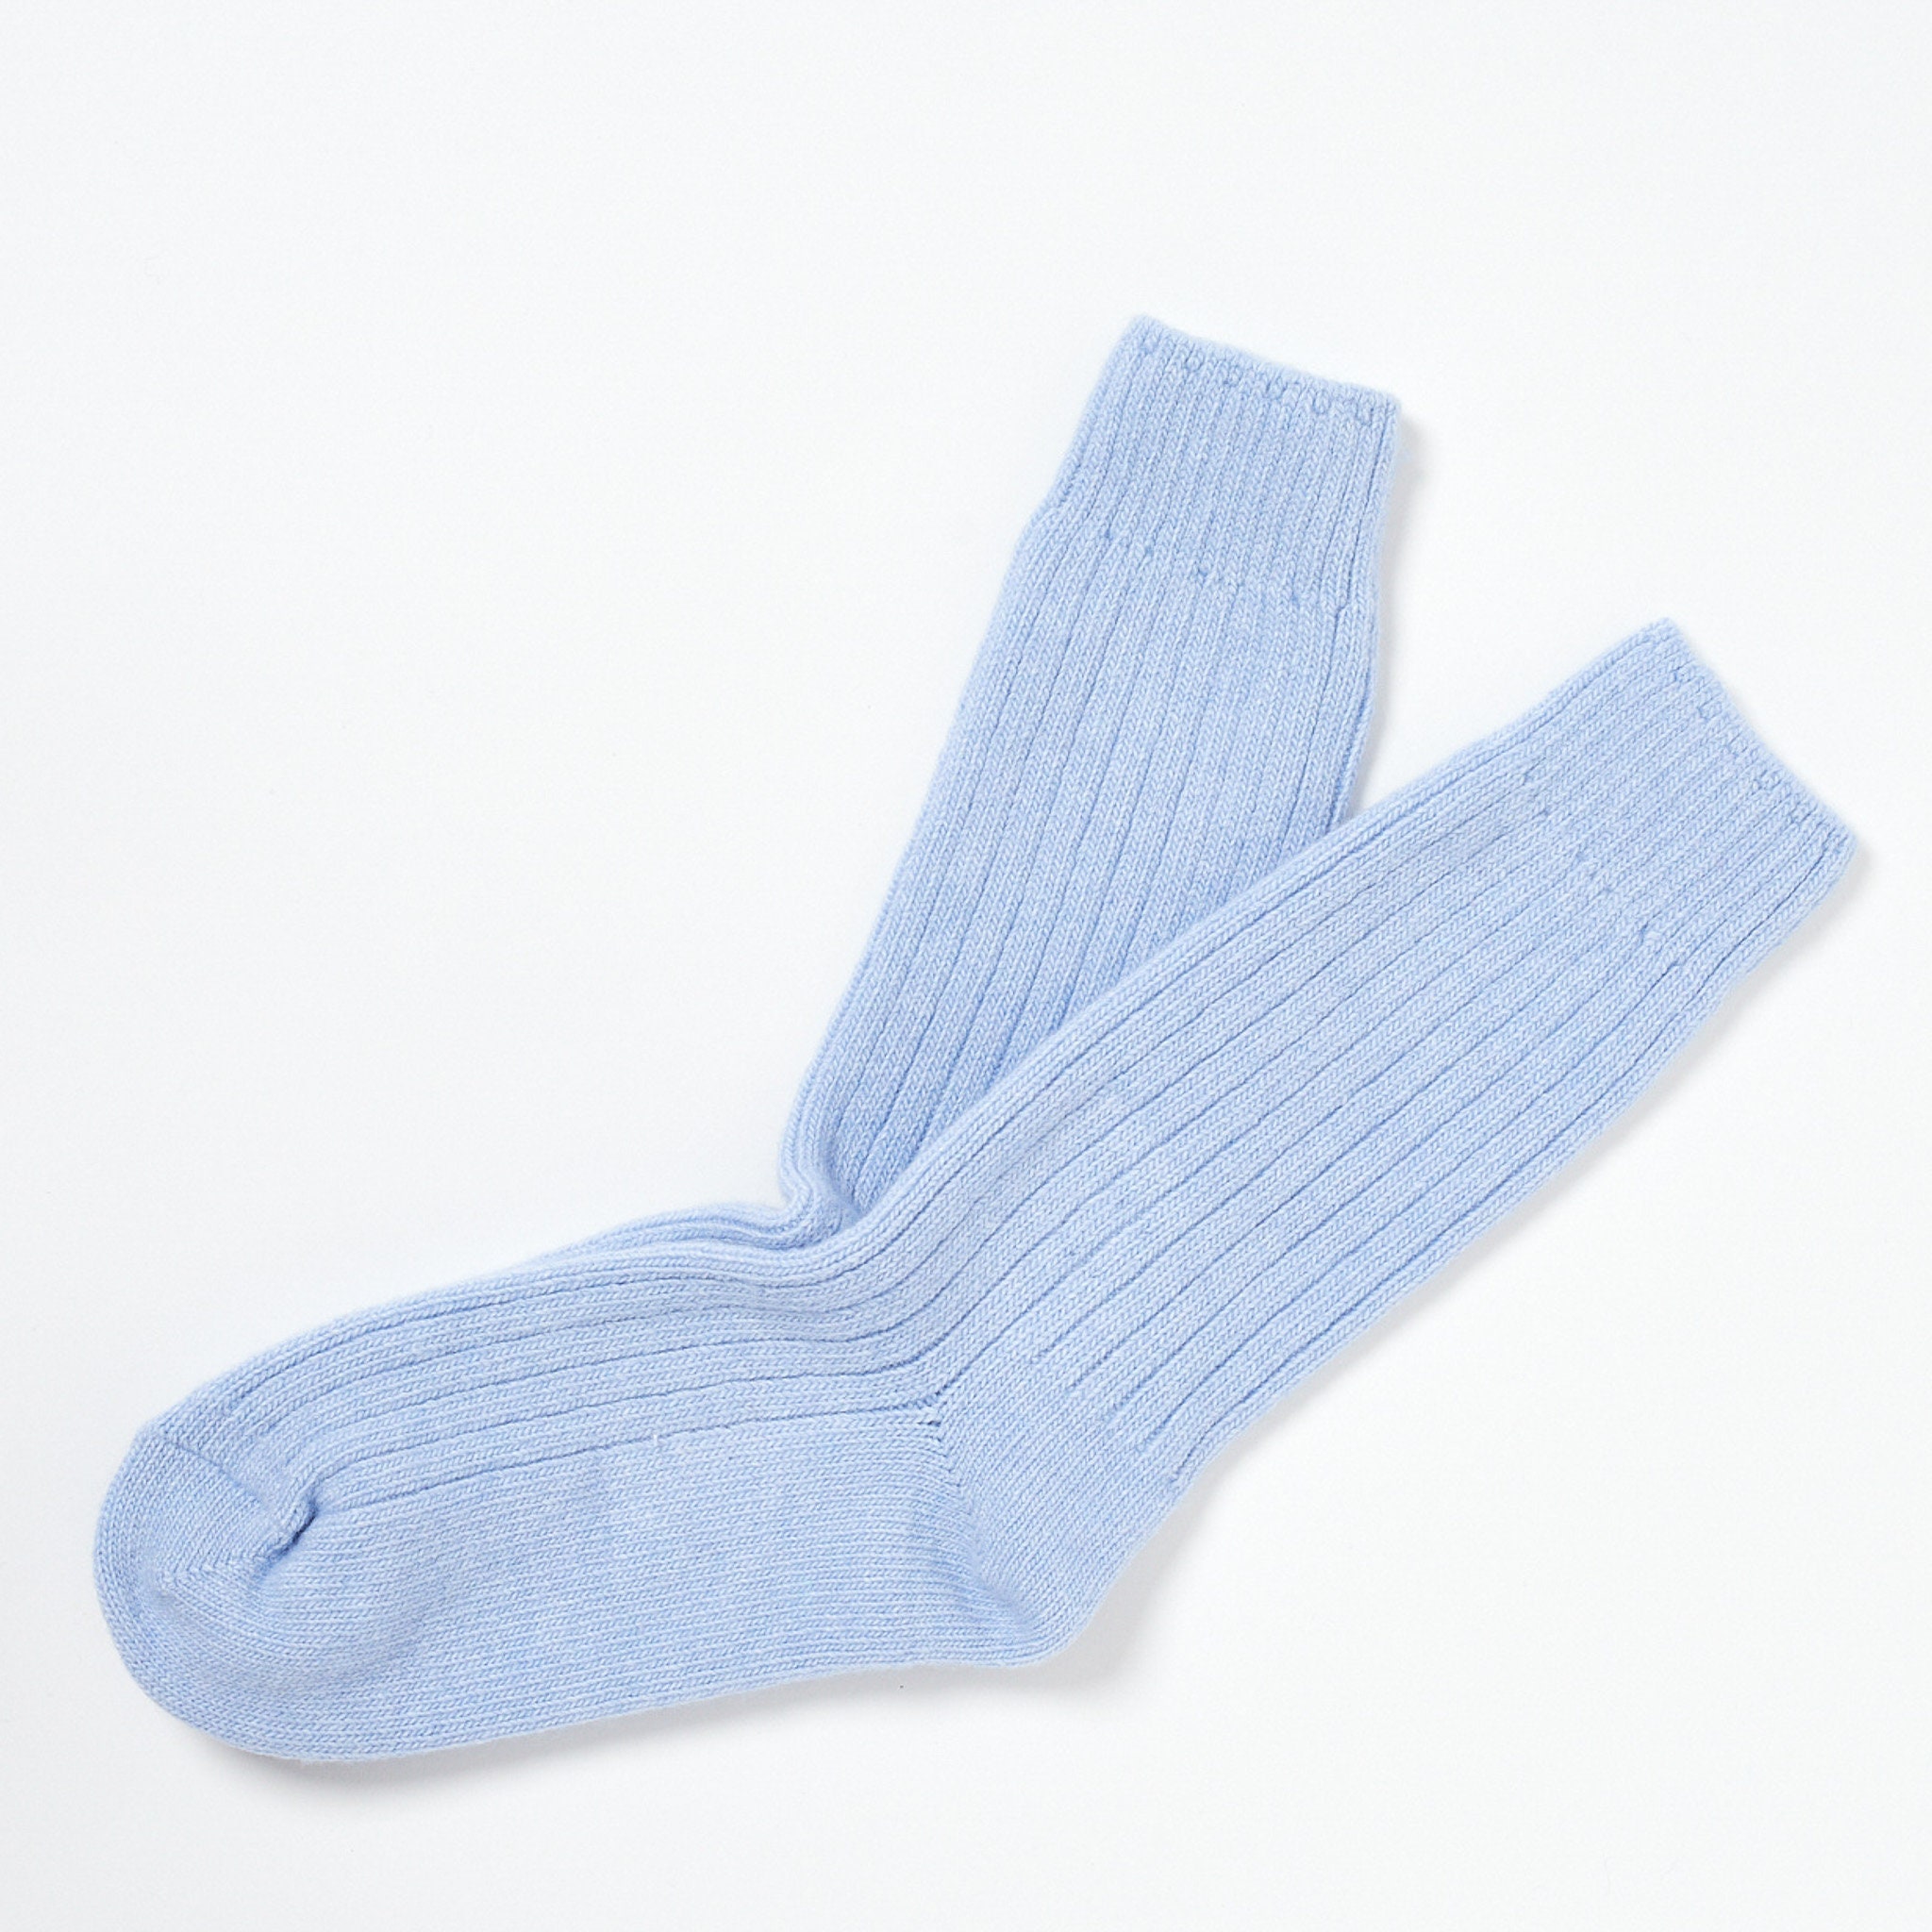 Cashmere Blend Socks - Dusty Blue Size M Uk 4-7 | Eur 37-41/Us 5.5 -8.5